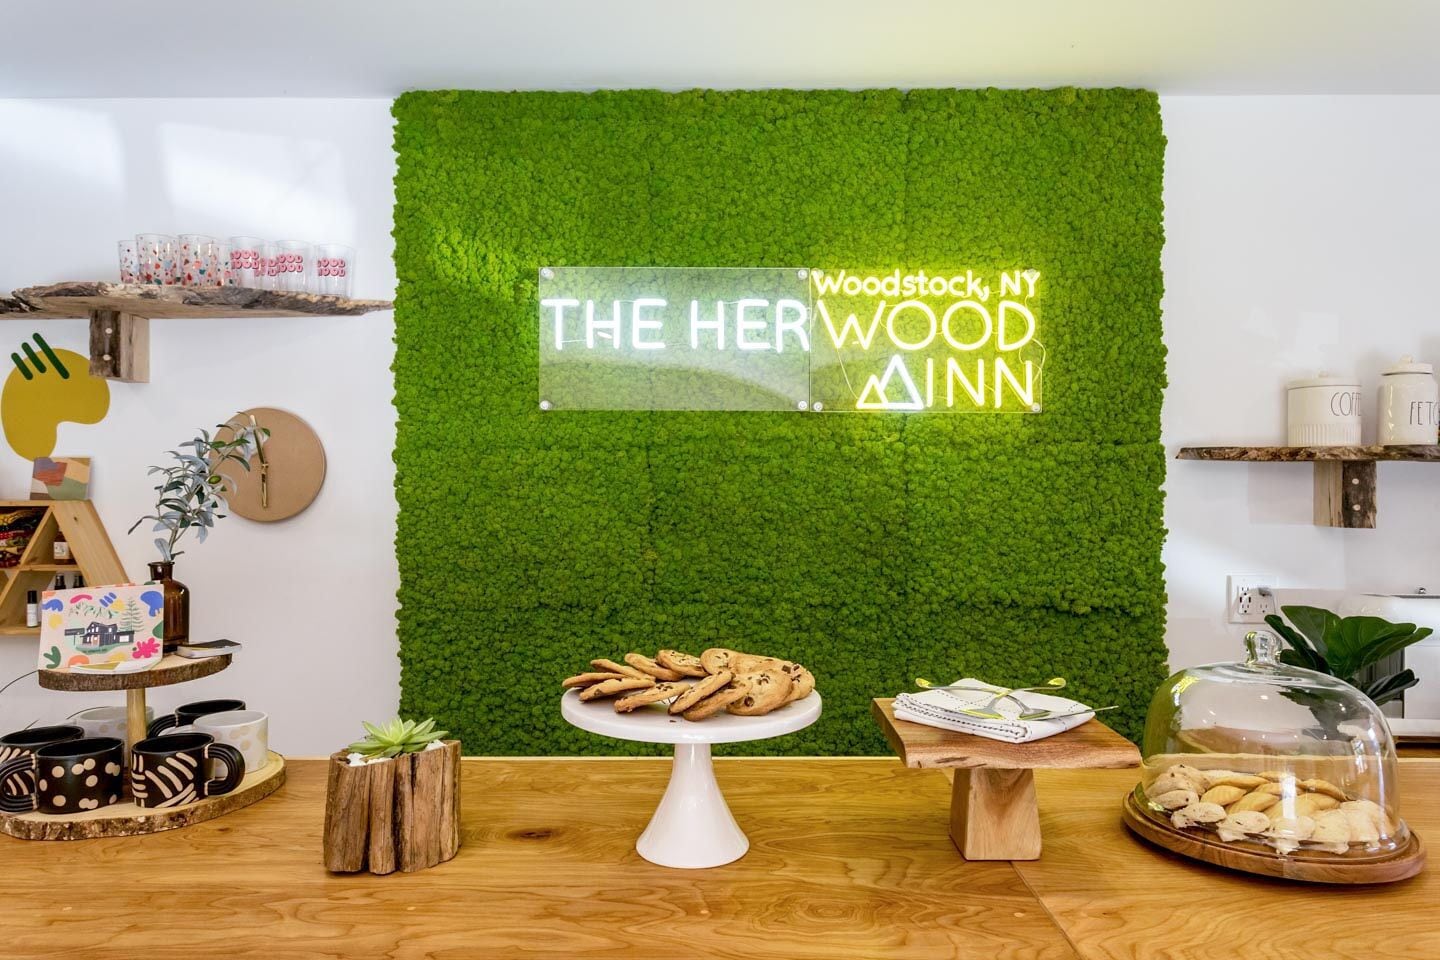 The Herwood Inn